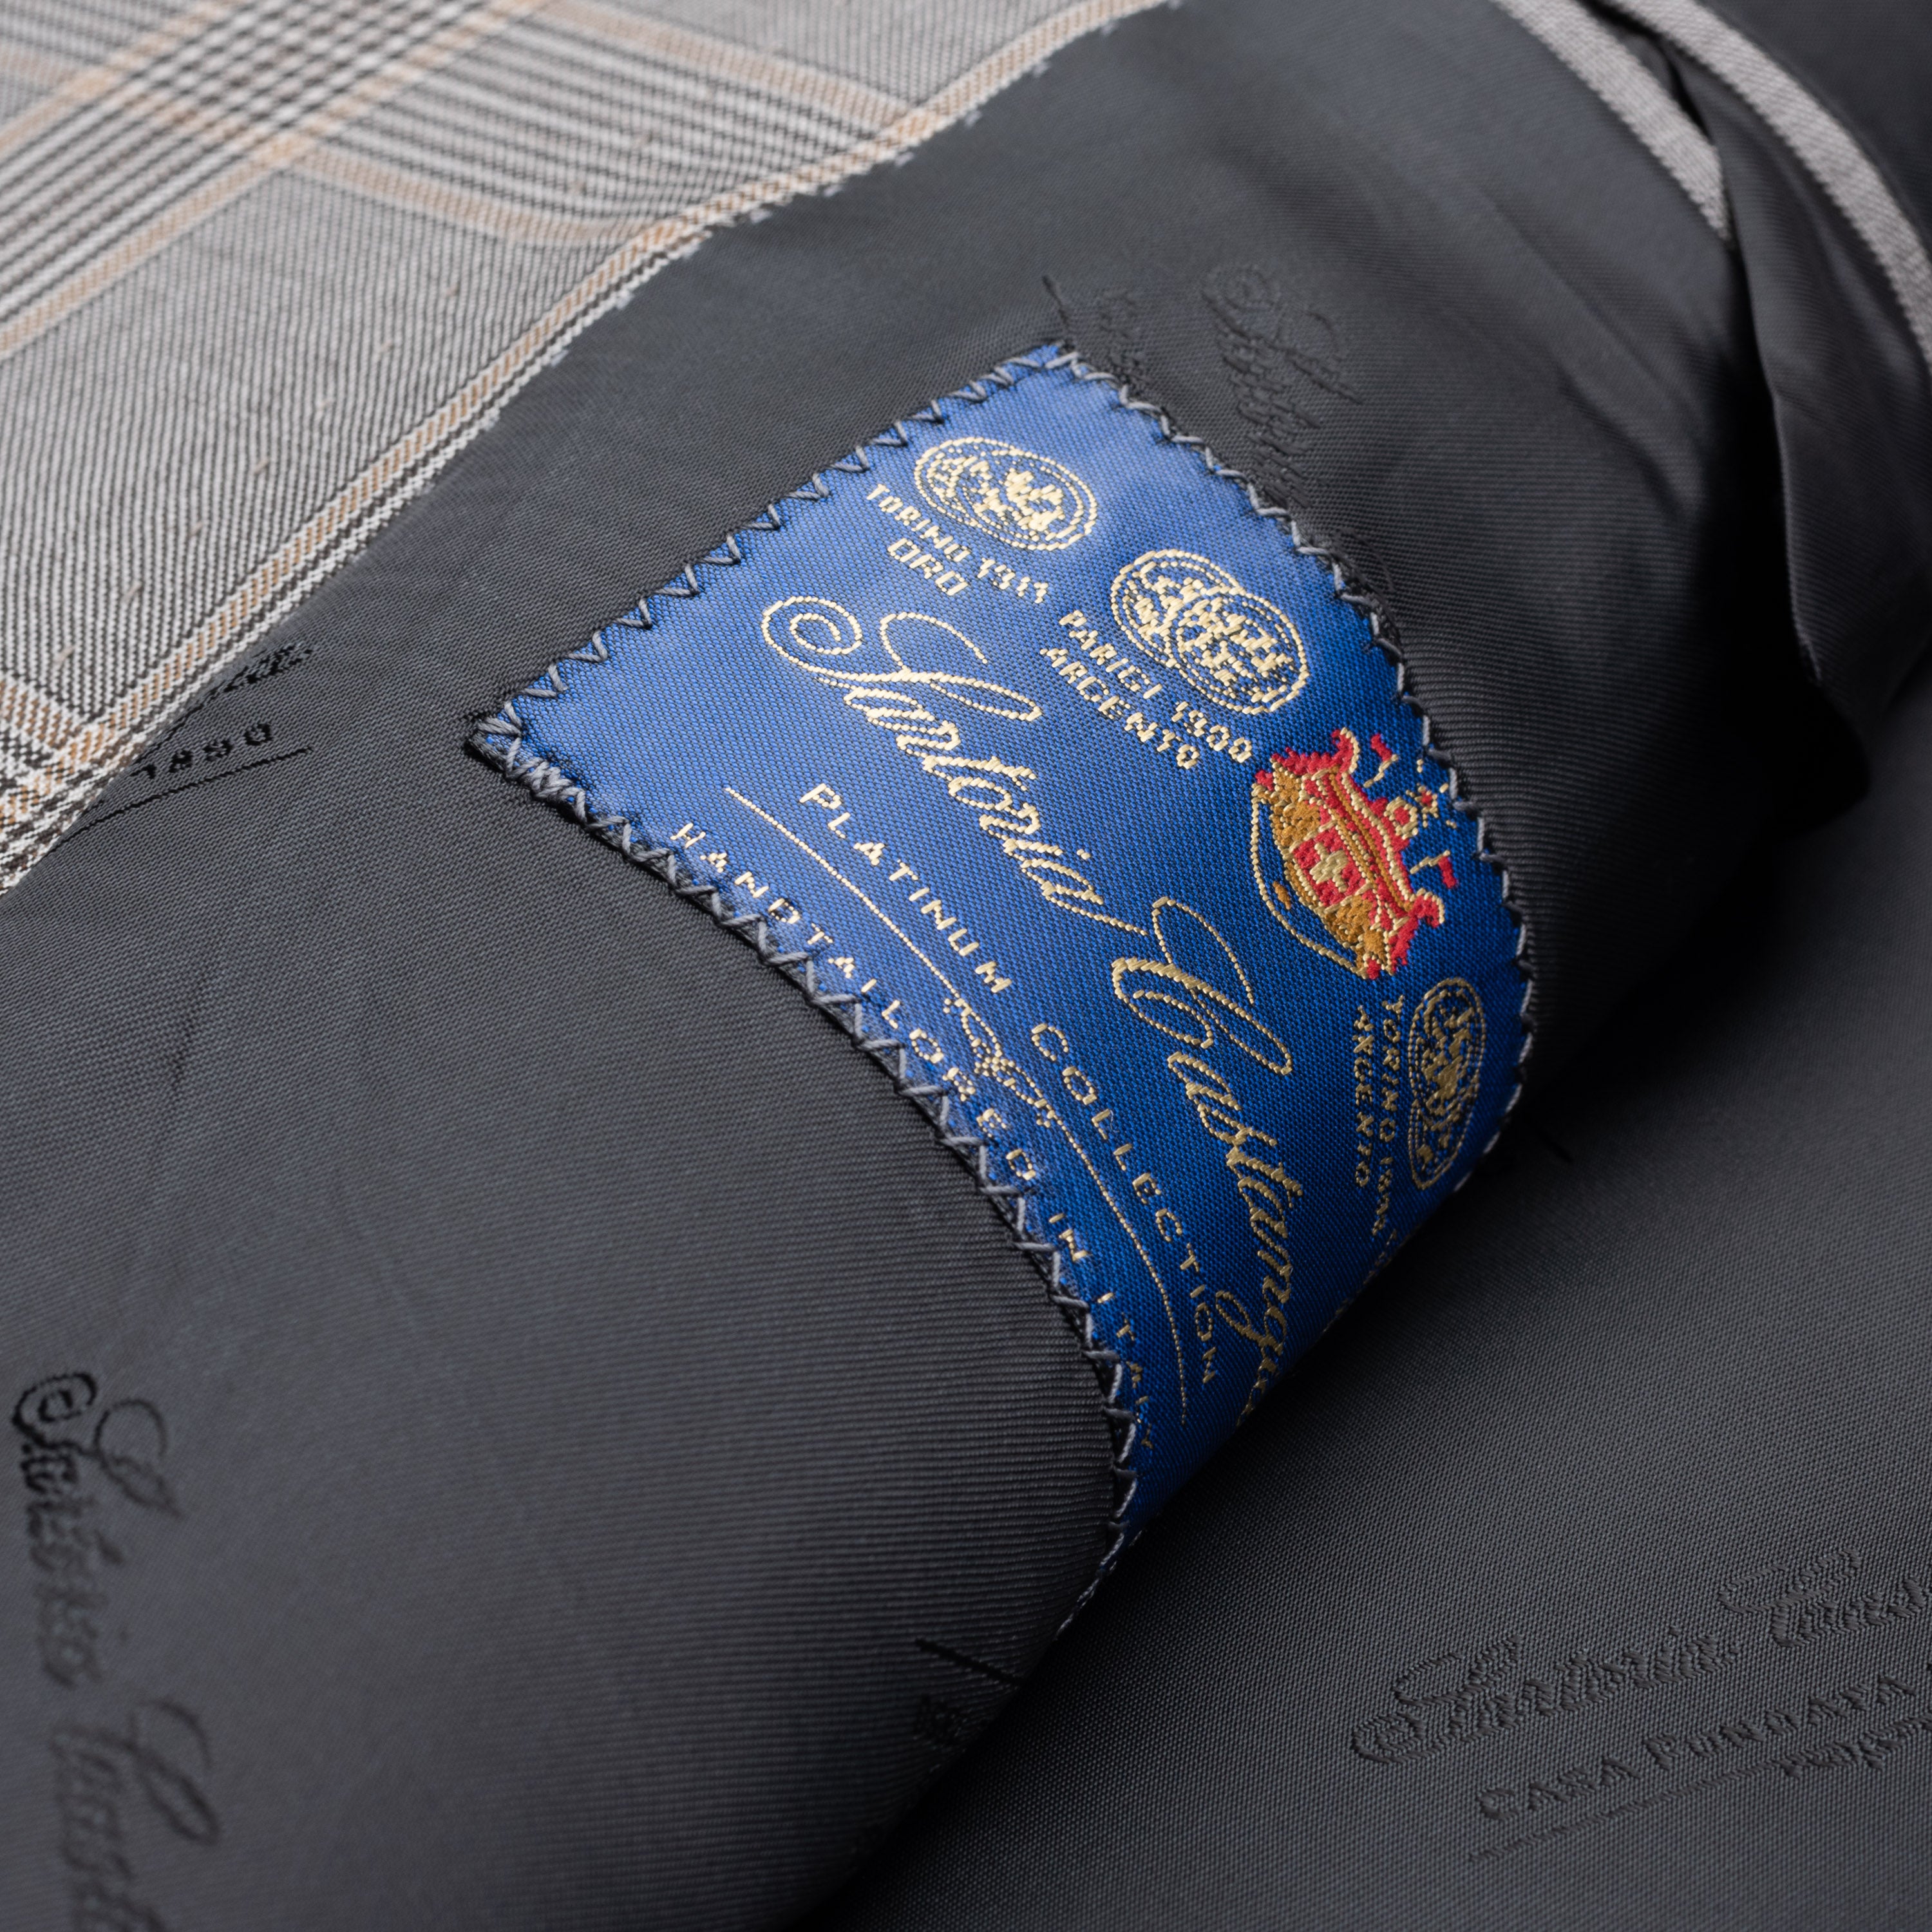 SARTORIA CASTANGIA Platinum Collection 130's Jacket 54 NEW US 42 Made for Celeb